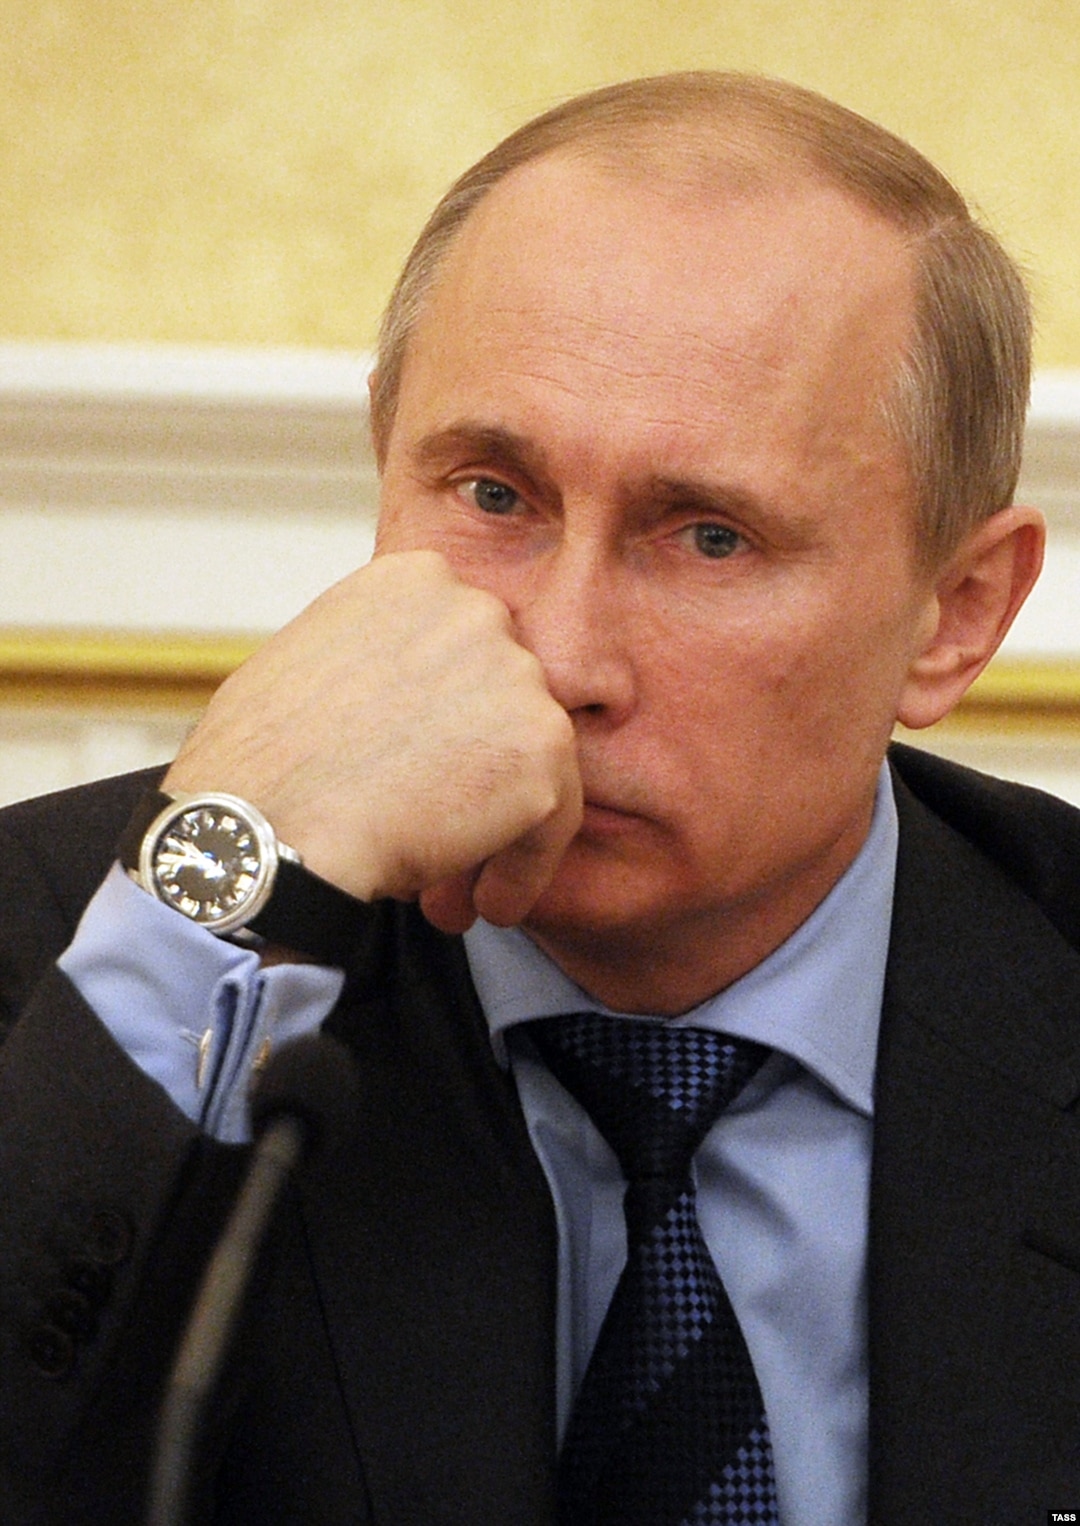 The Watch of Vladimir Putin: Blancpain Aqua Lung Grande Date - YouTube